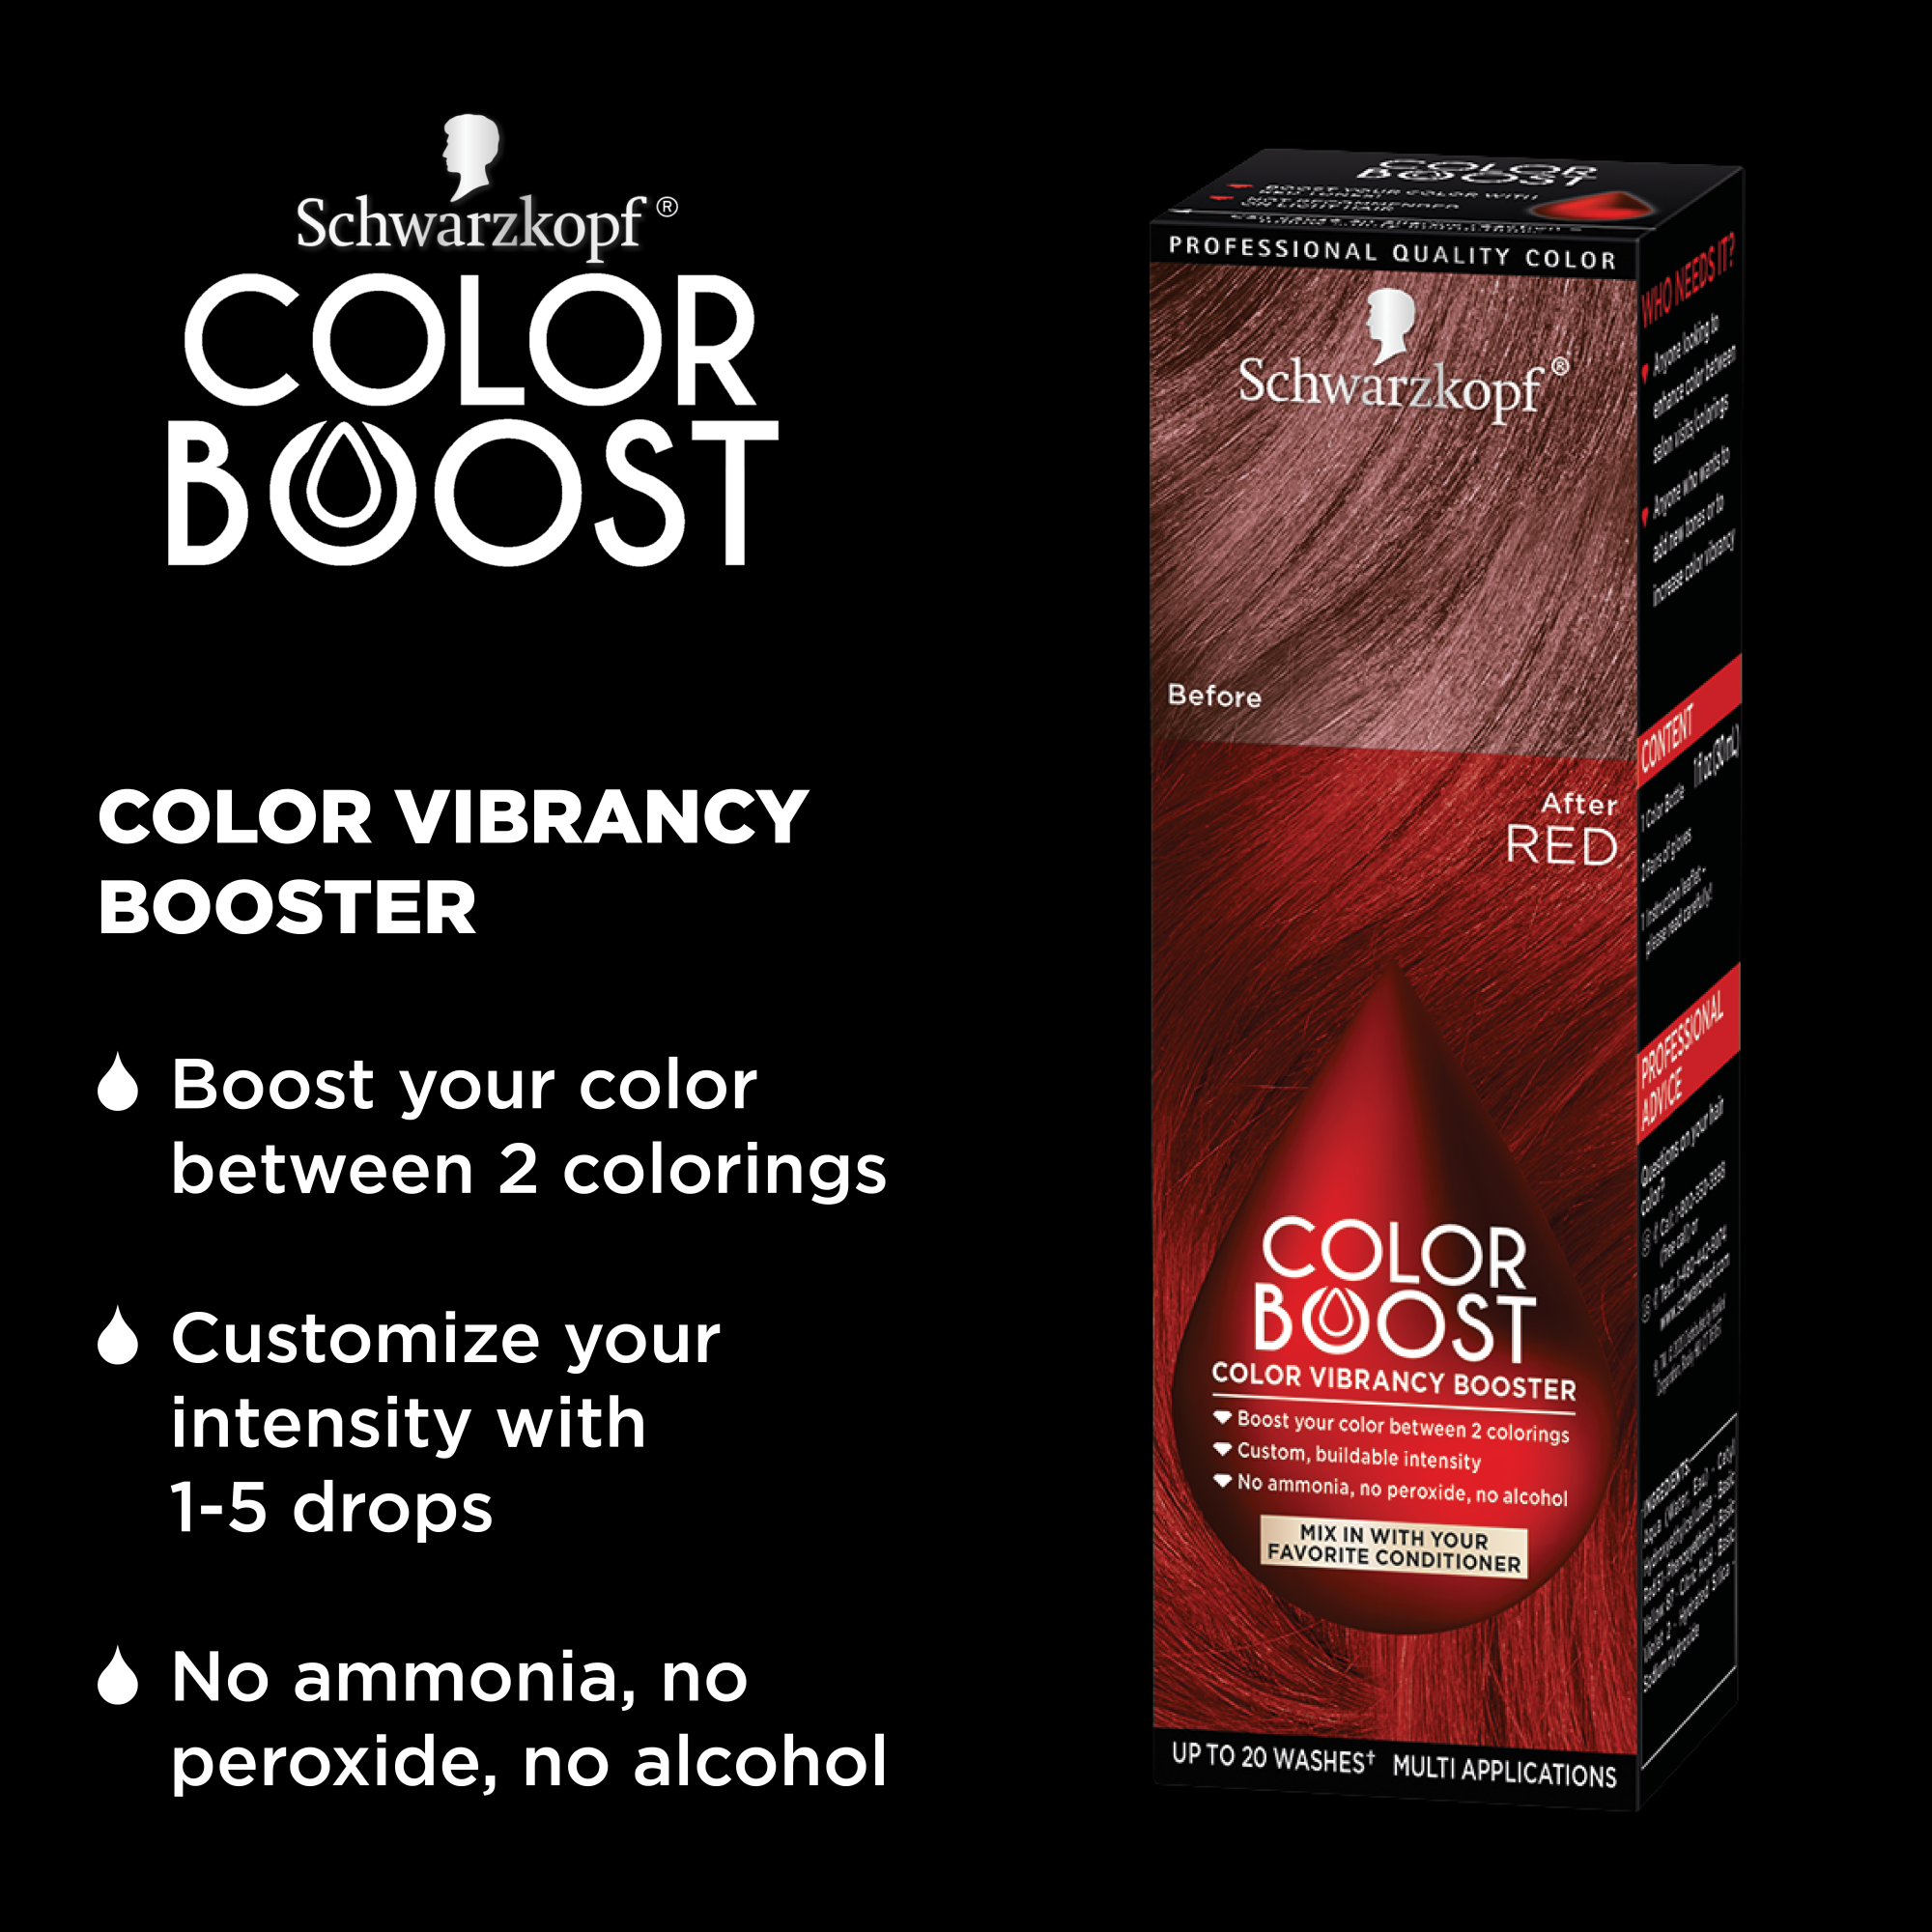 Schwarzkopf Color Boost Color Vibrancy Booster, Red, 1 fl oz - image 5 of 10